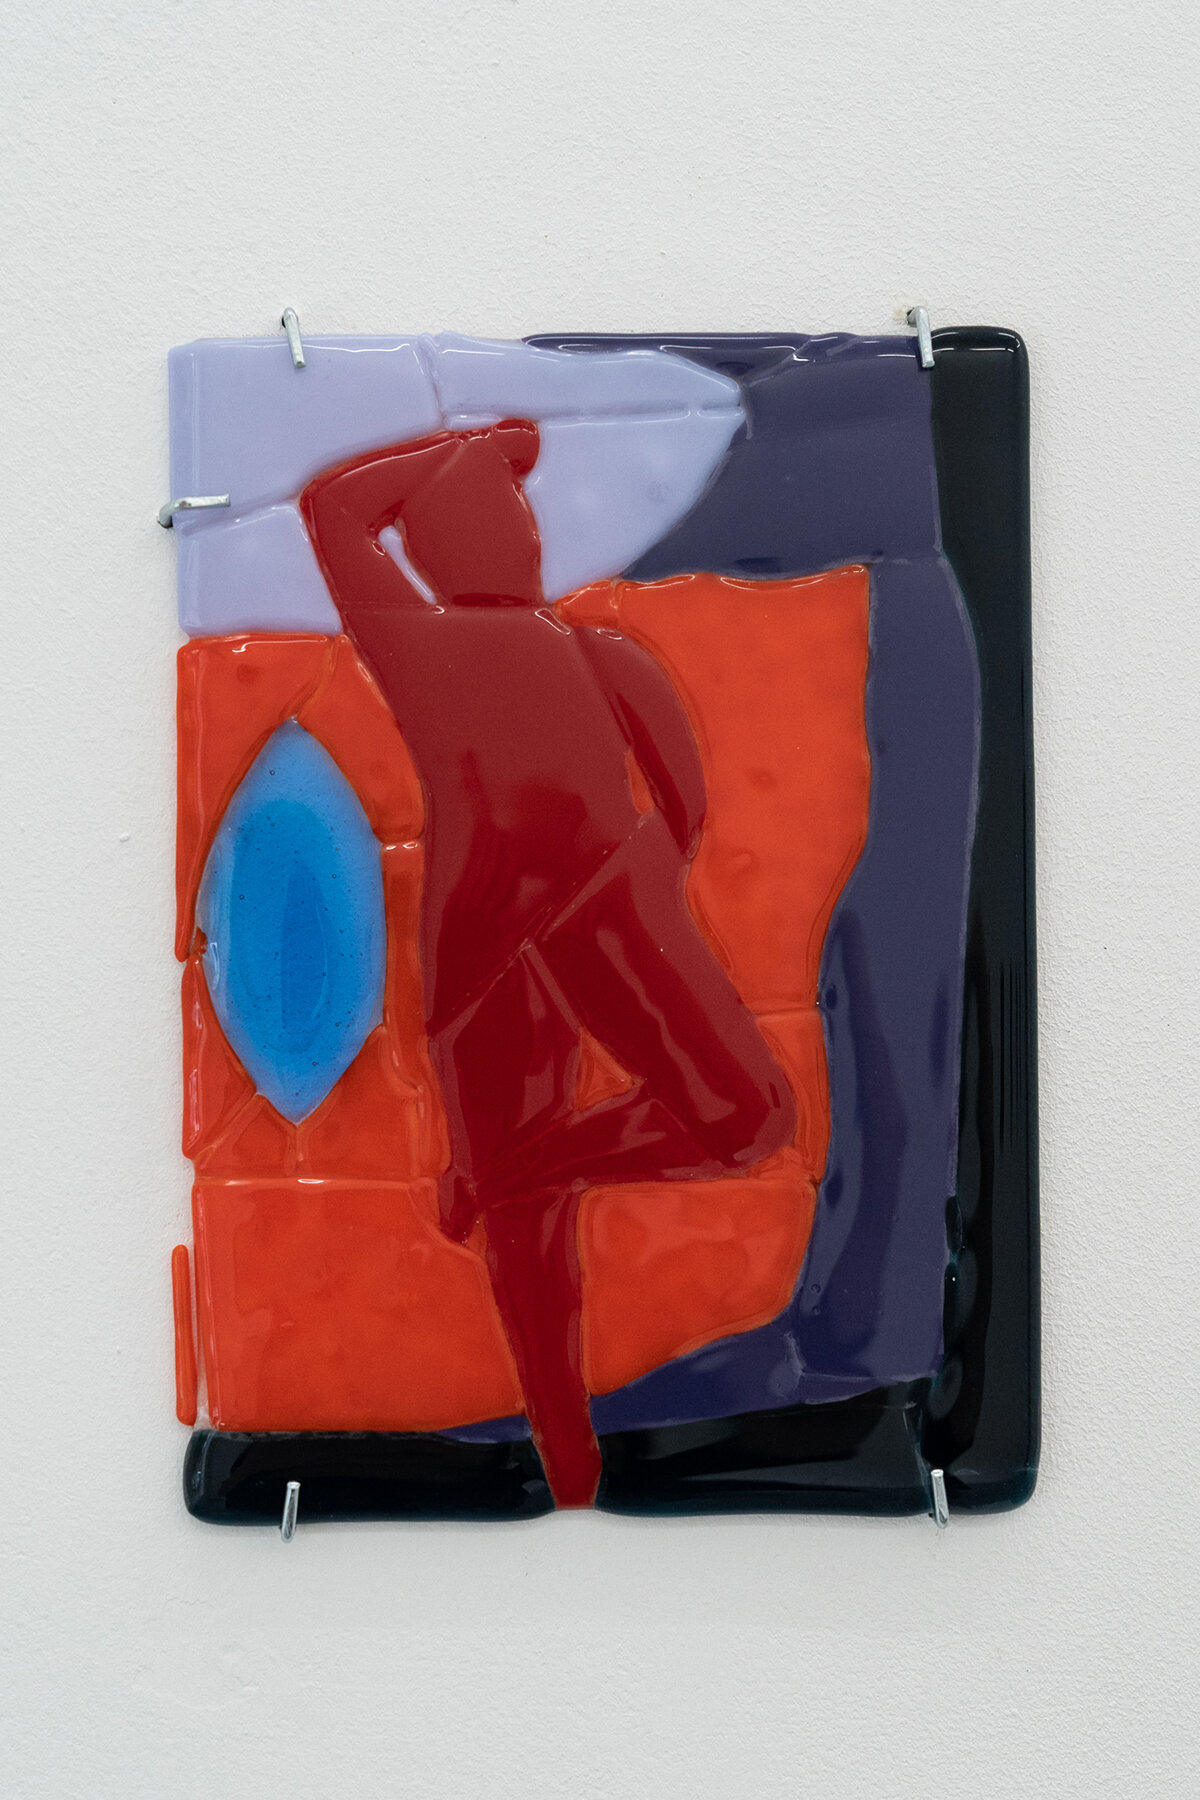 Elisabeth Greinecker, Untitled, glass and nails, 16 x 21cm, 2021